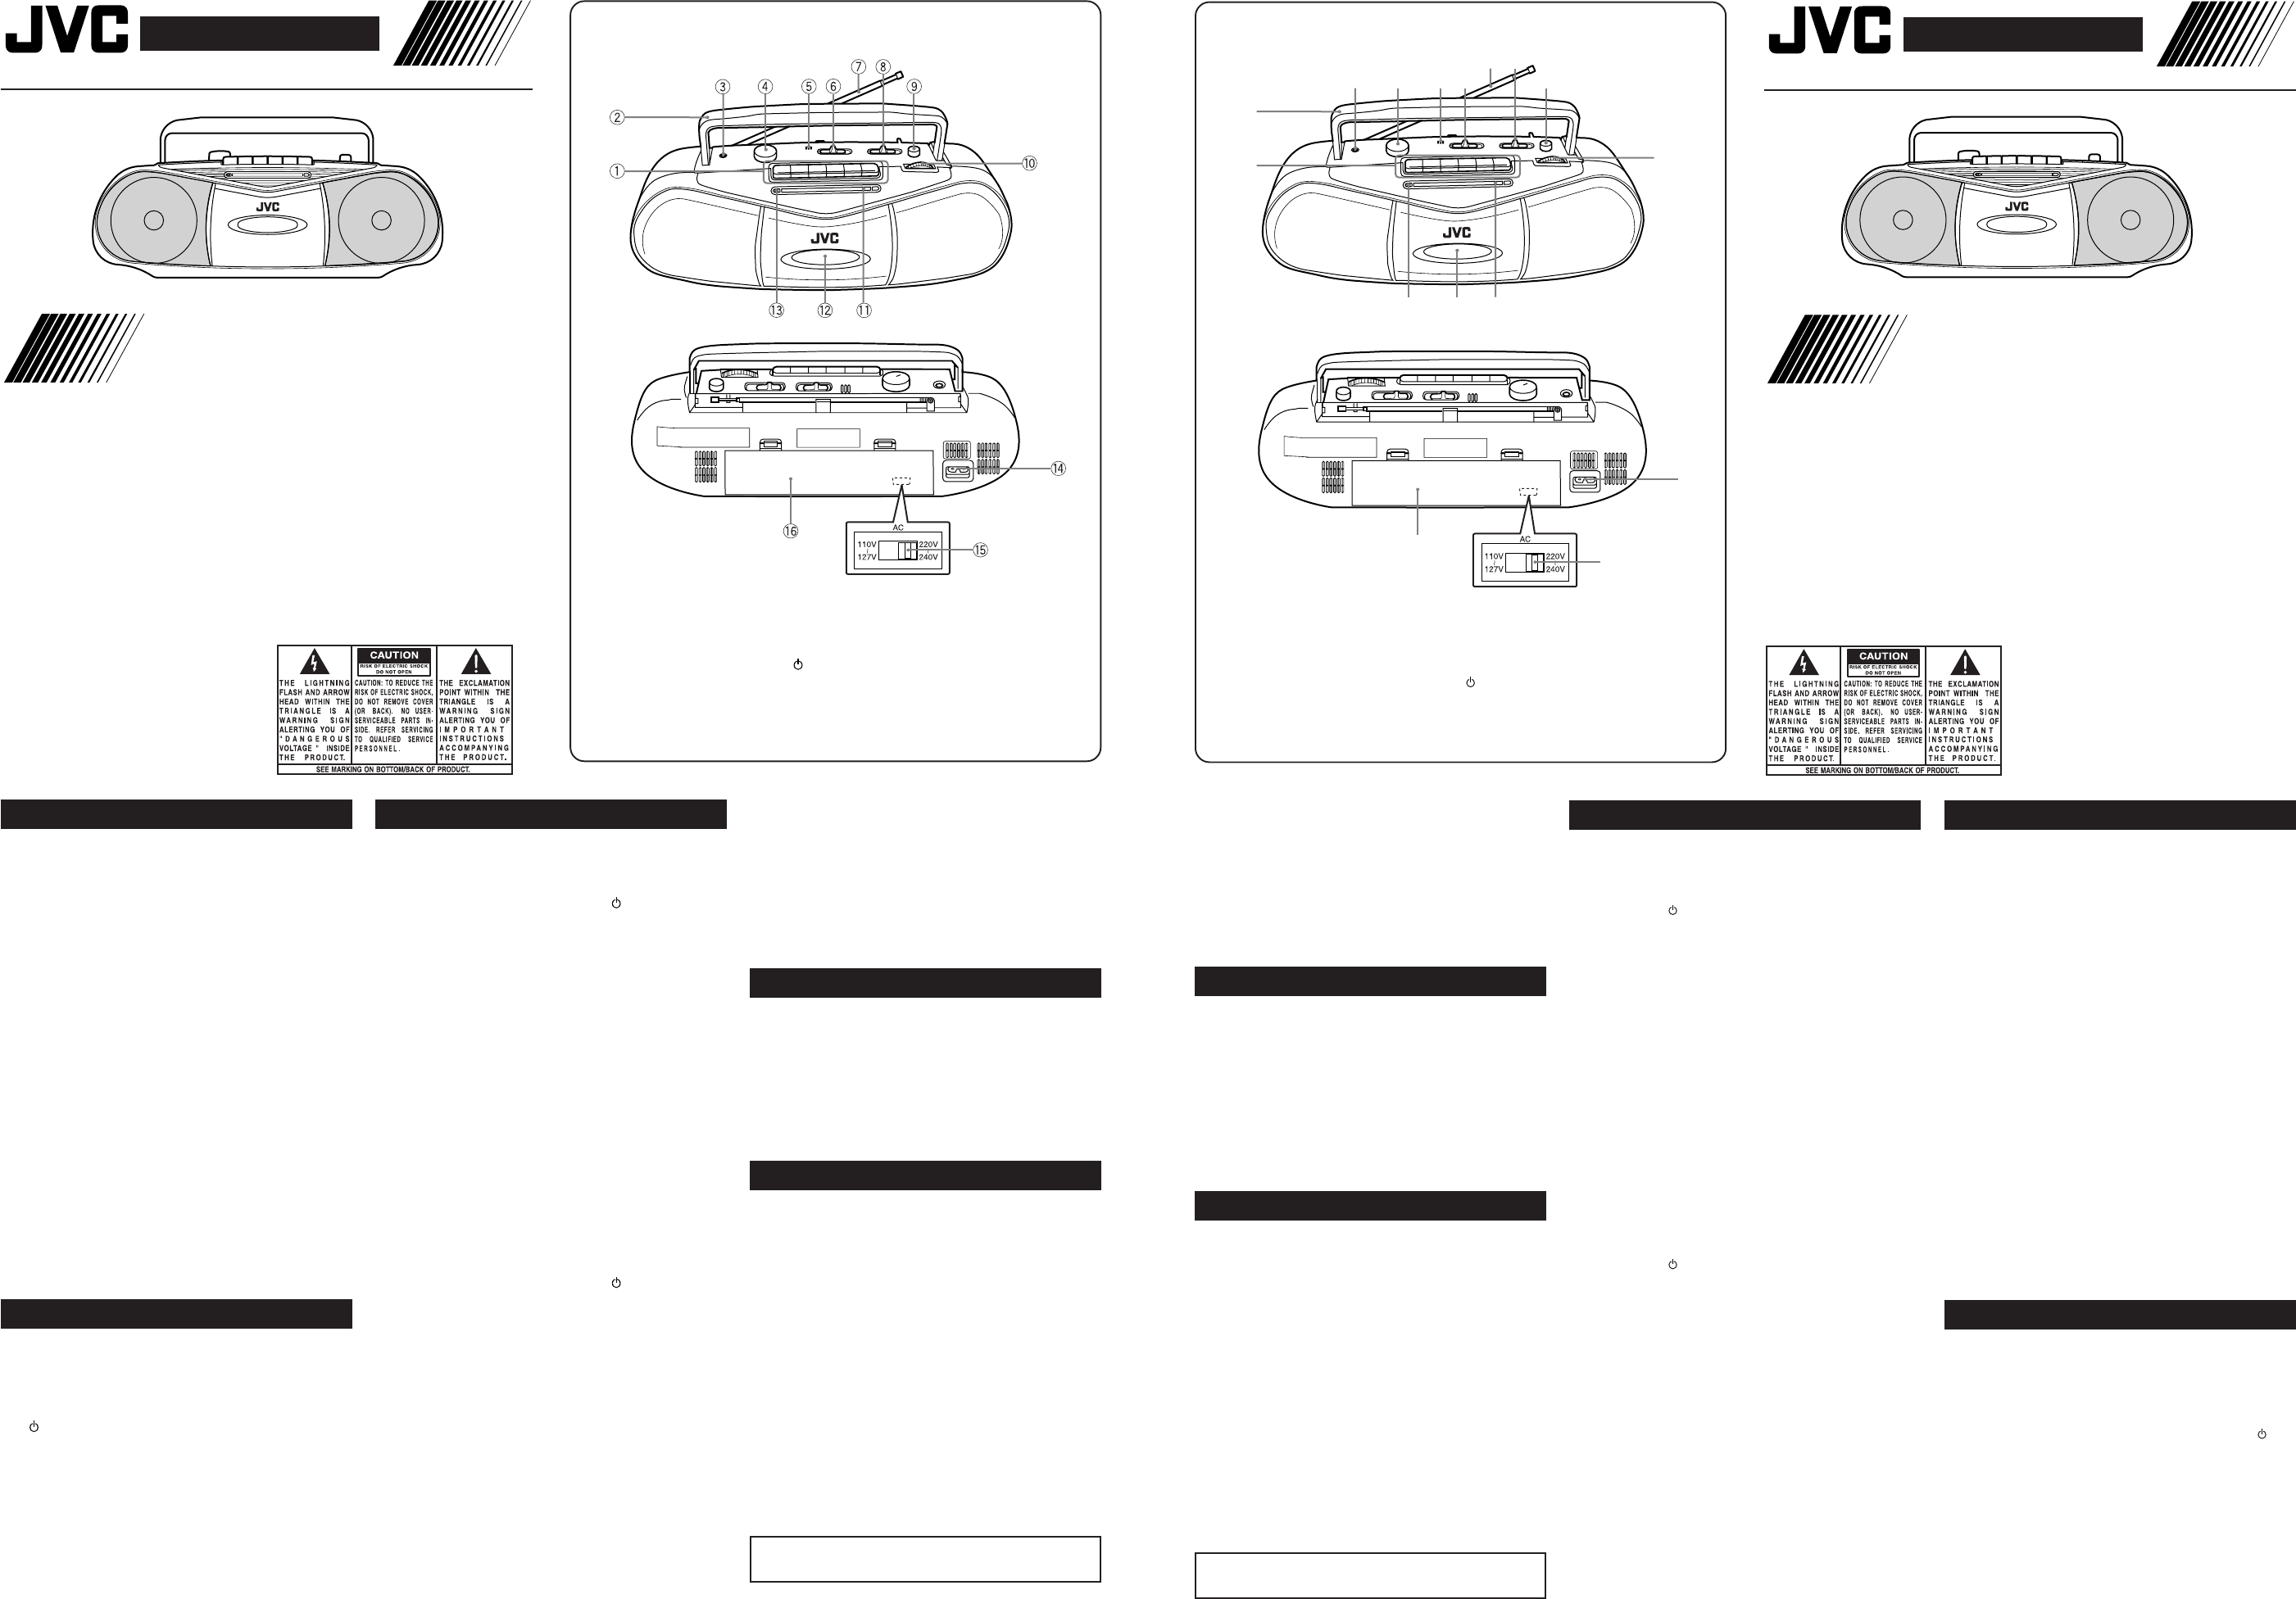 Jvc Rc S3 Tk03e081 Ru User Manual Lvt1104 001a